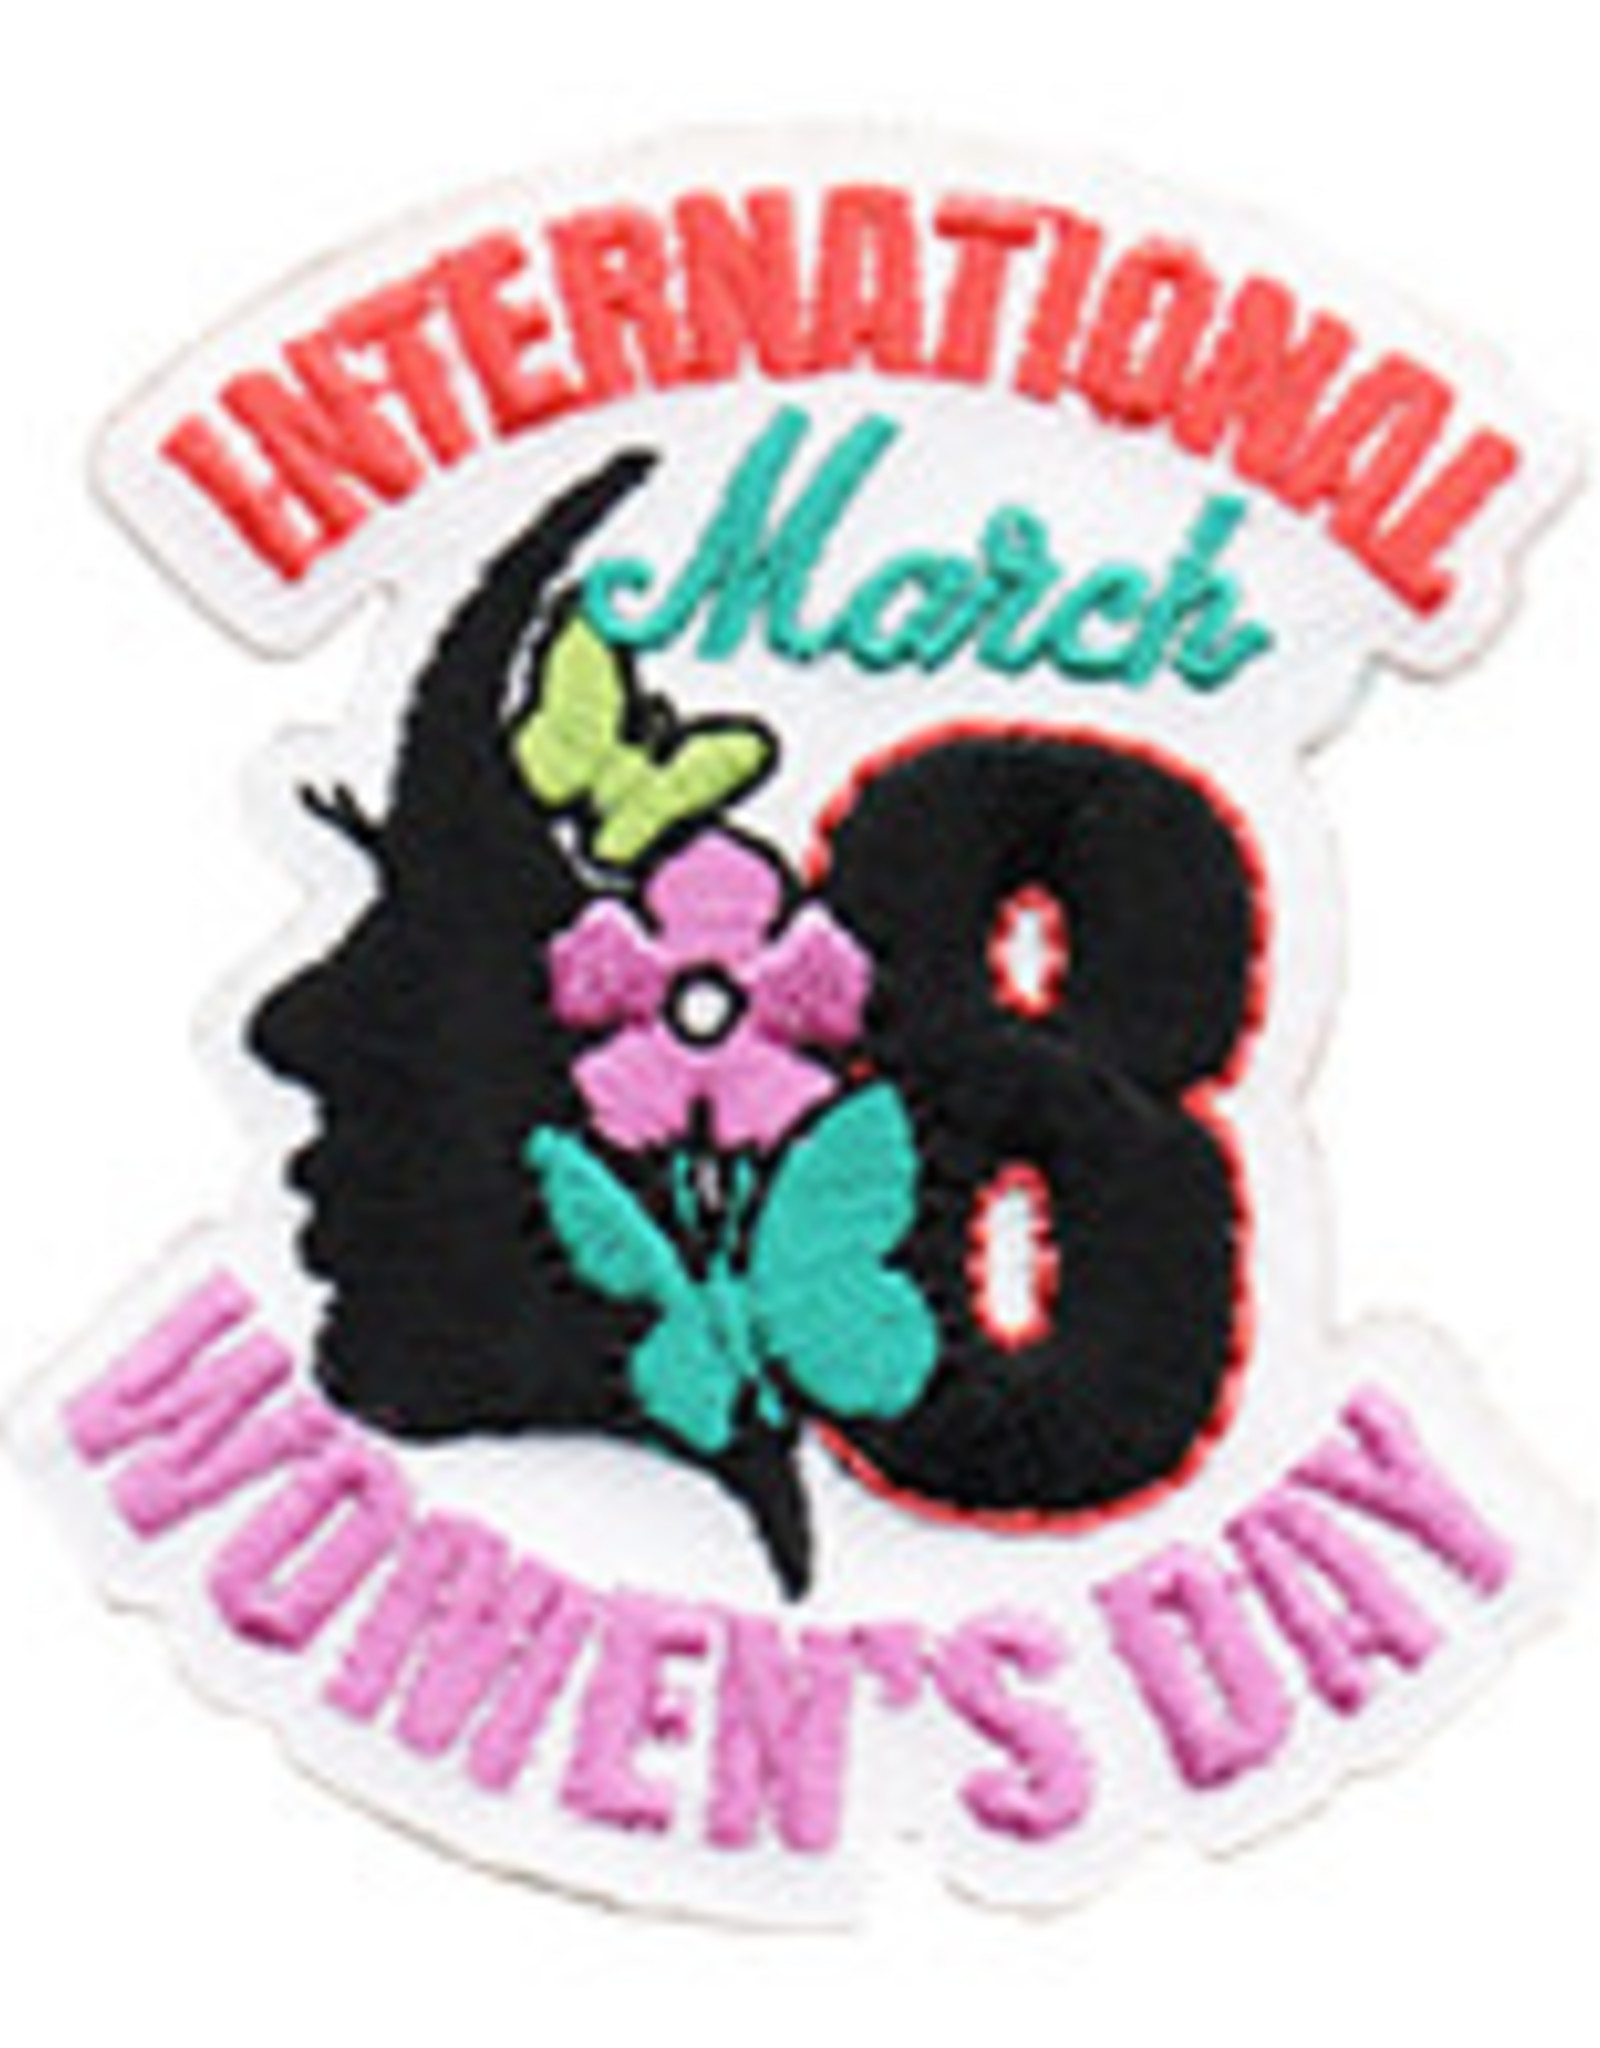 International Women's Day Fun Patch